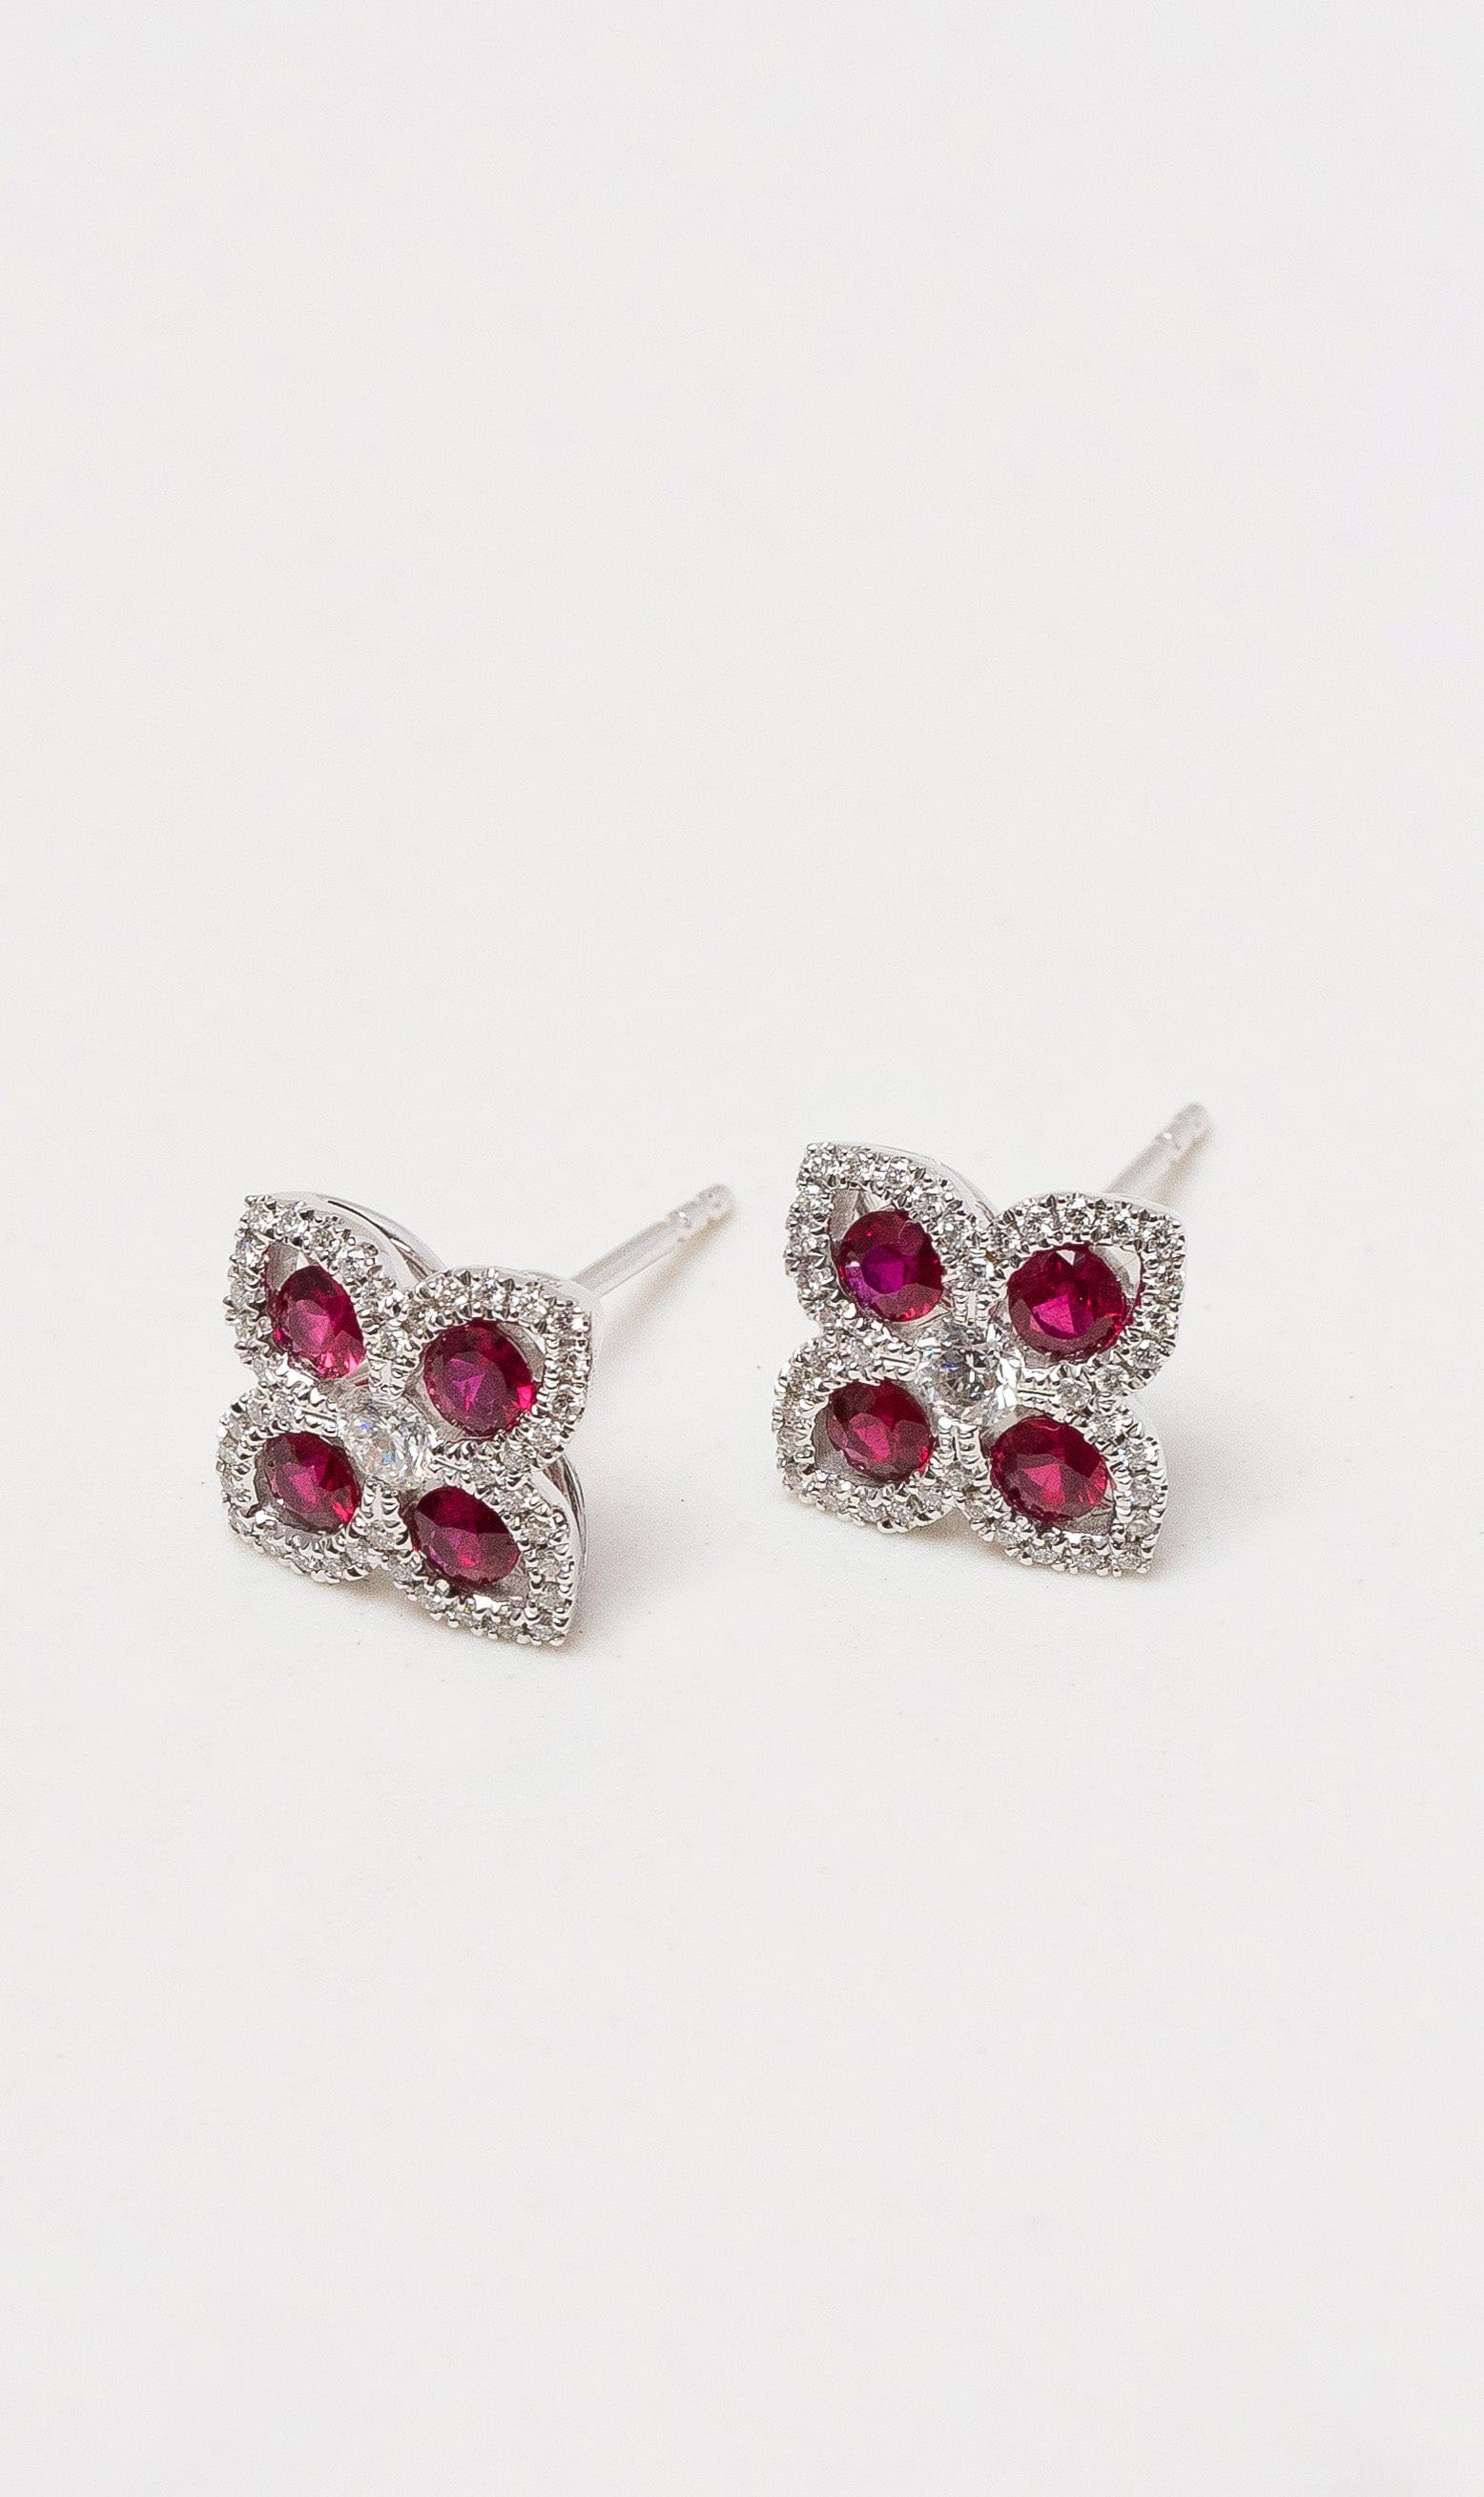 Hogans Family Jewellers 18K WG Ruby Cluster Stud Earrings